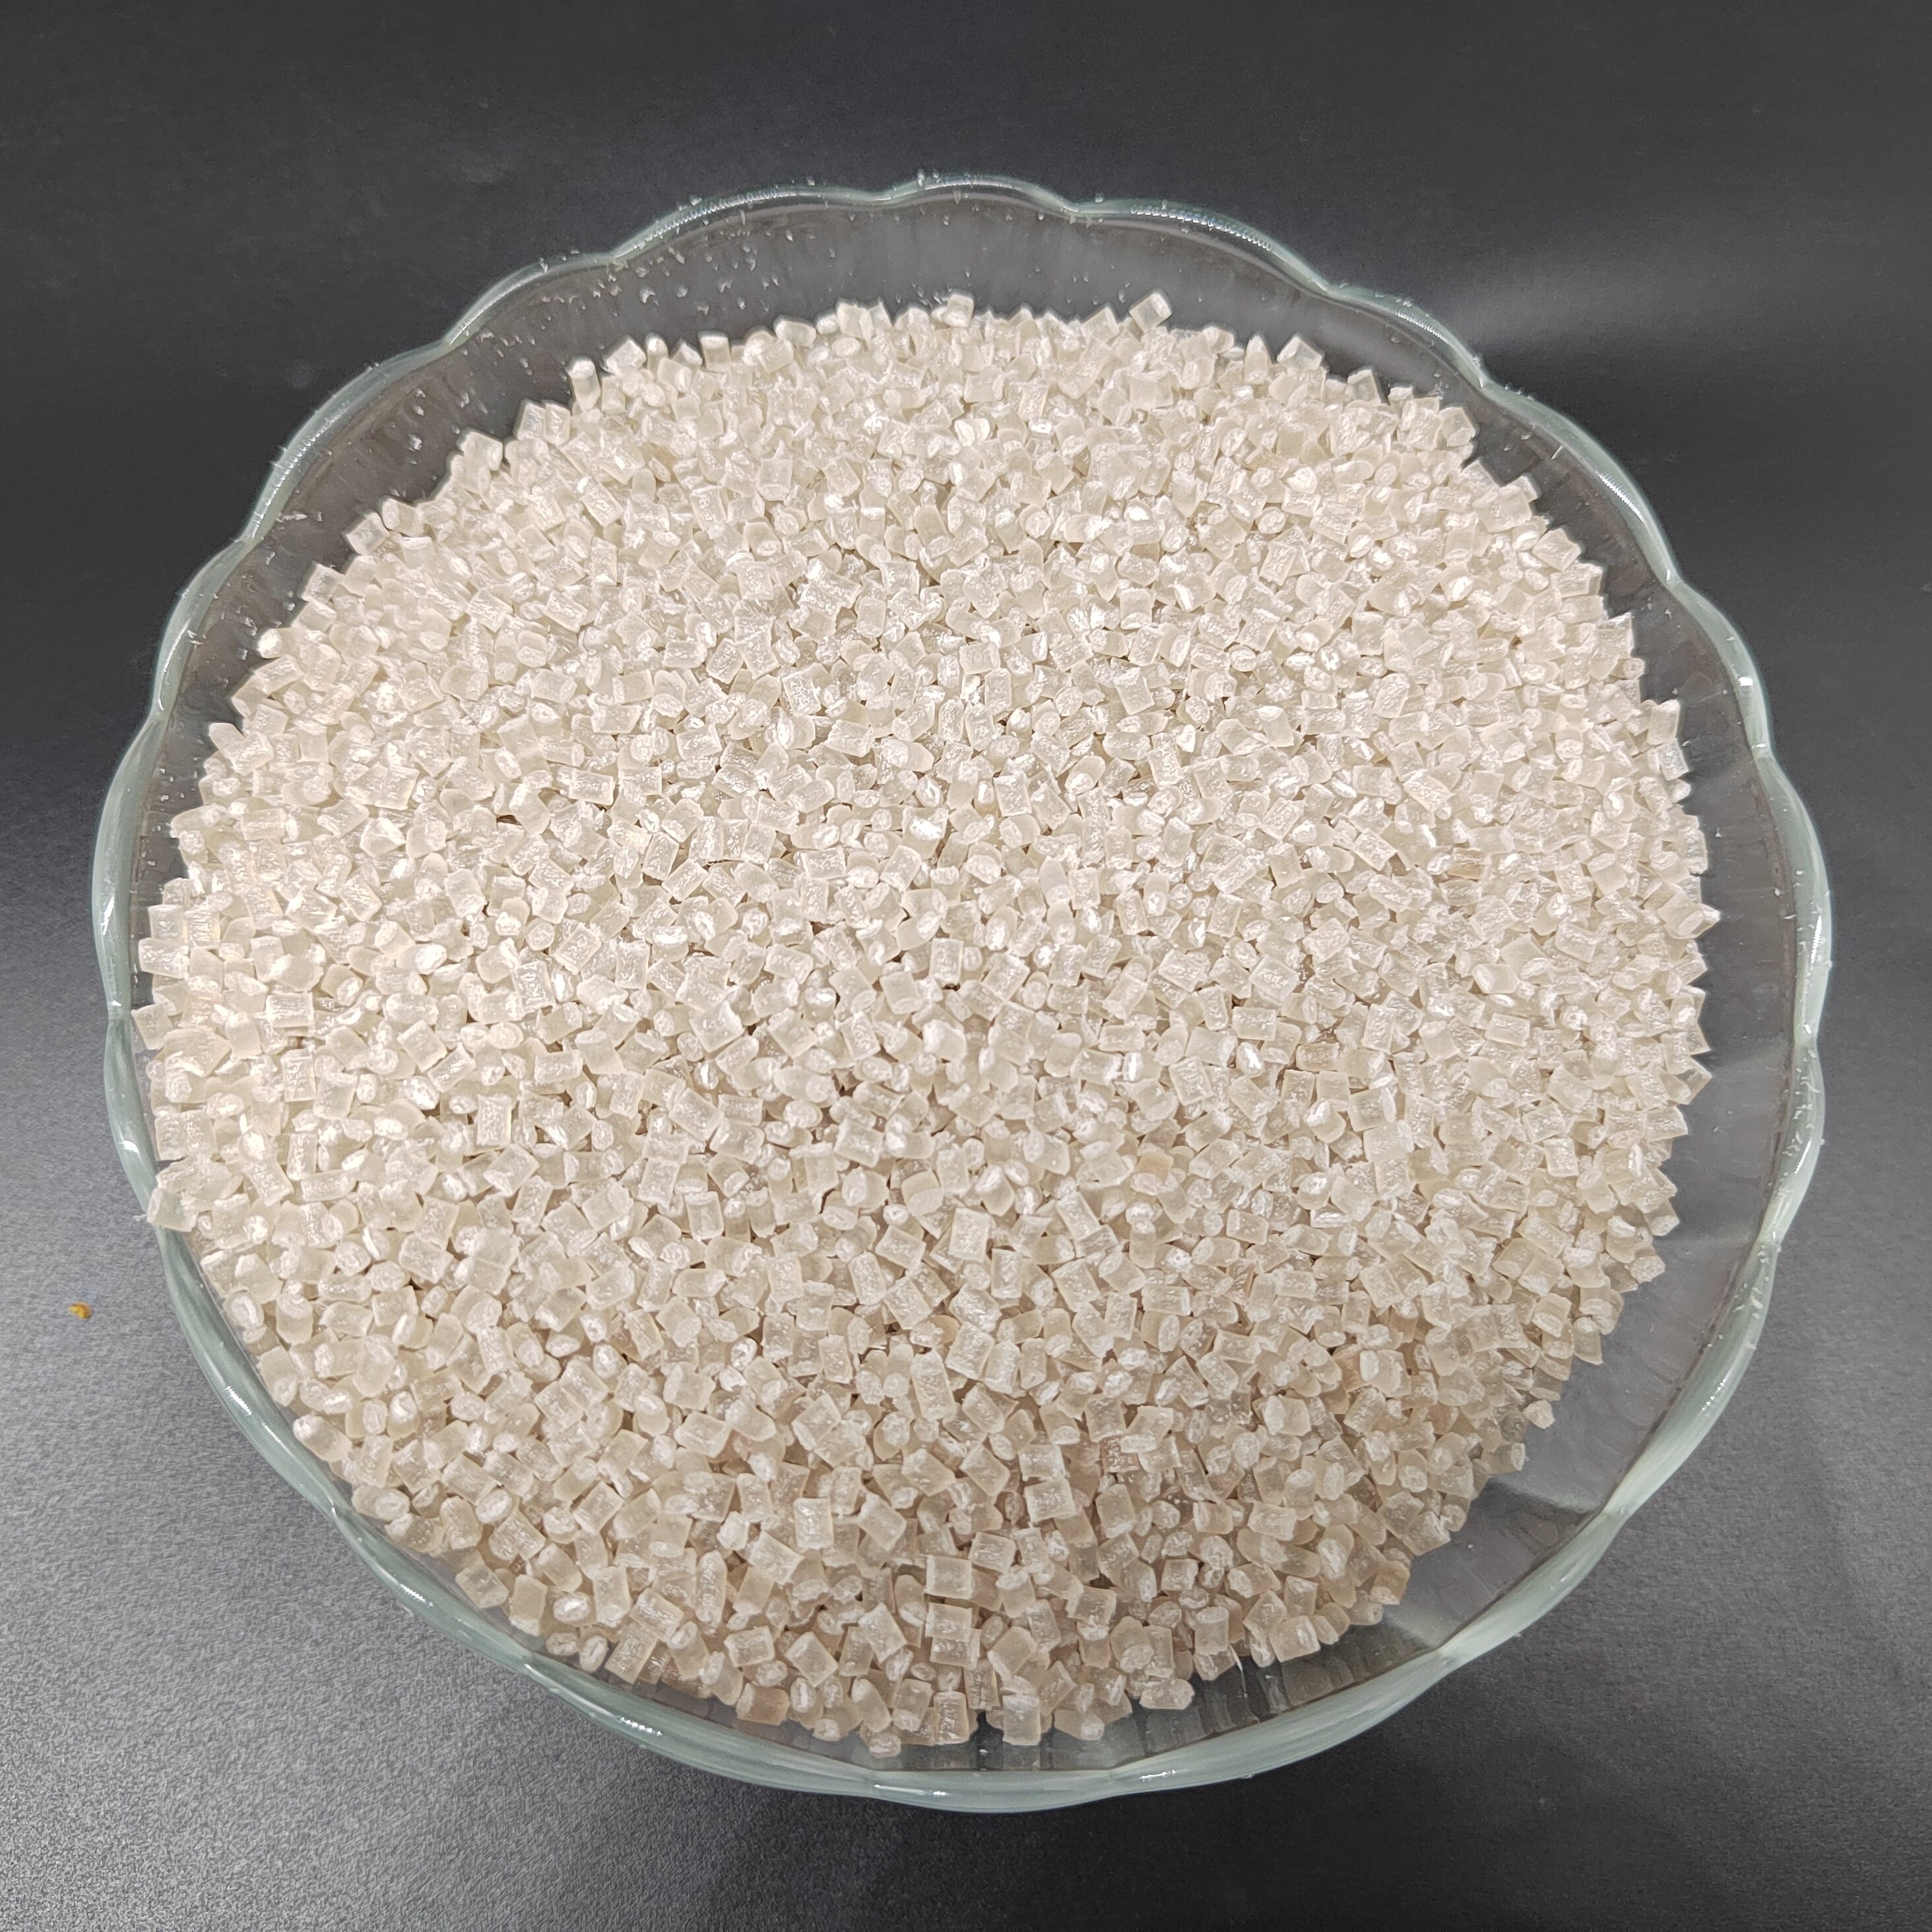 Polycarbonate Granules Price, Polycarbonate Resin Price